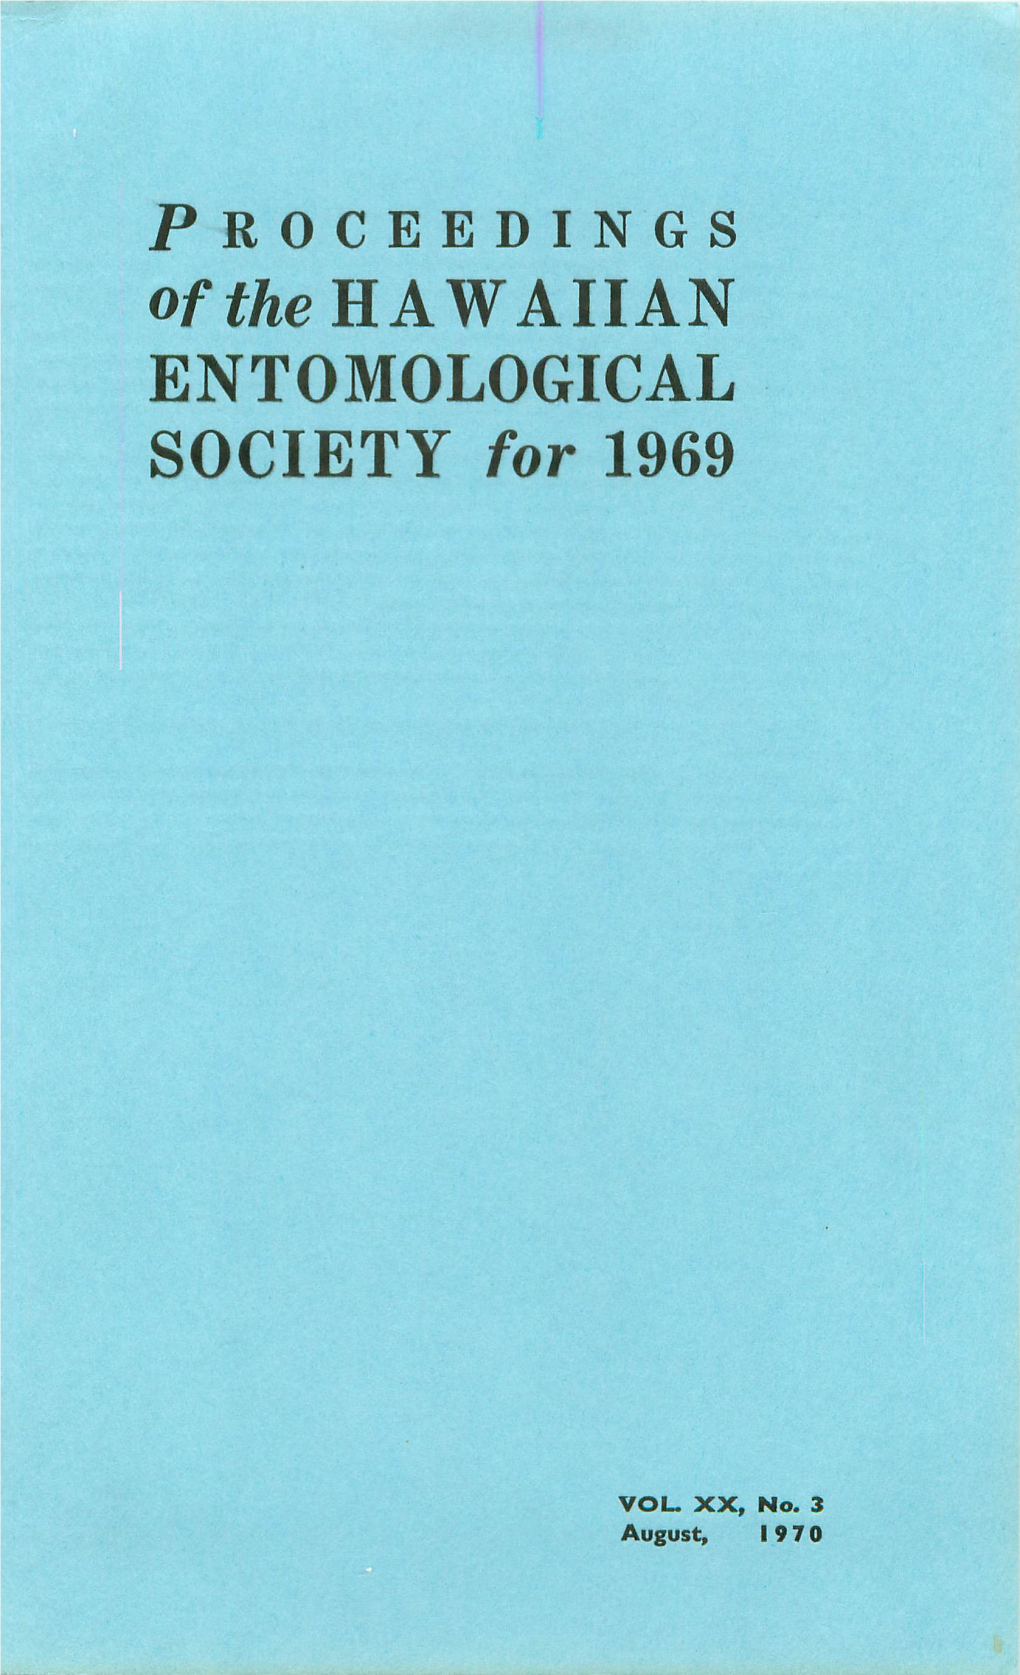 Of the HAWAIIAN ENTOMOLOGICAL SOCIETY for 1969